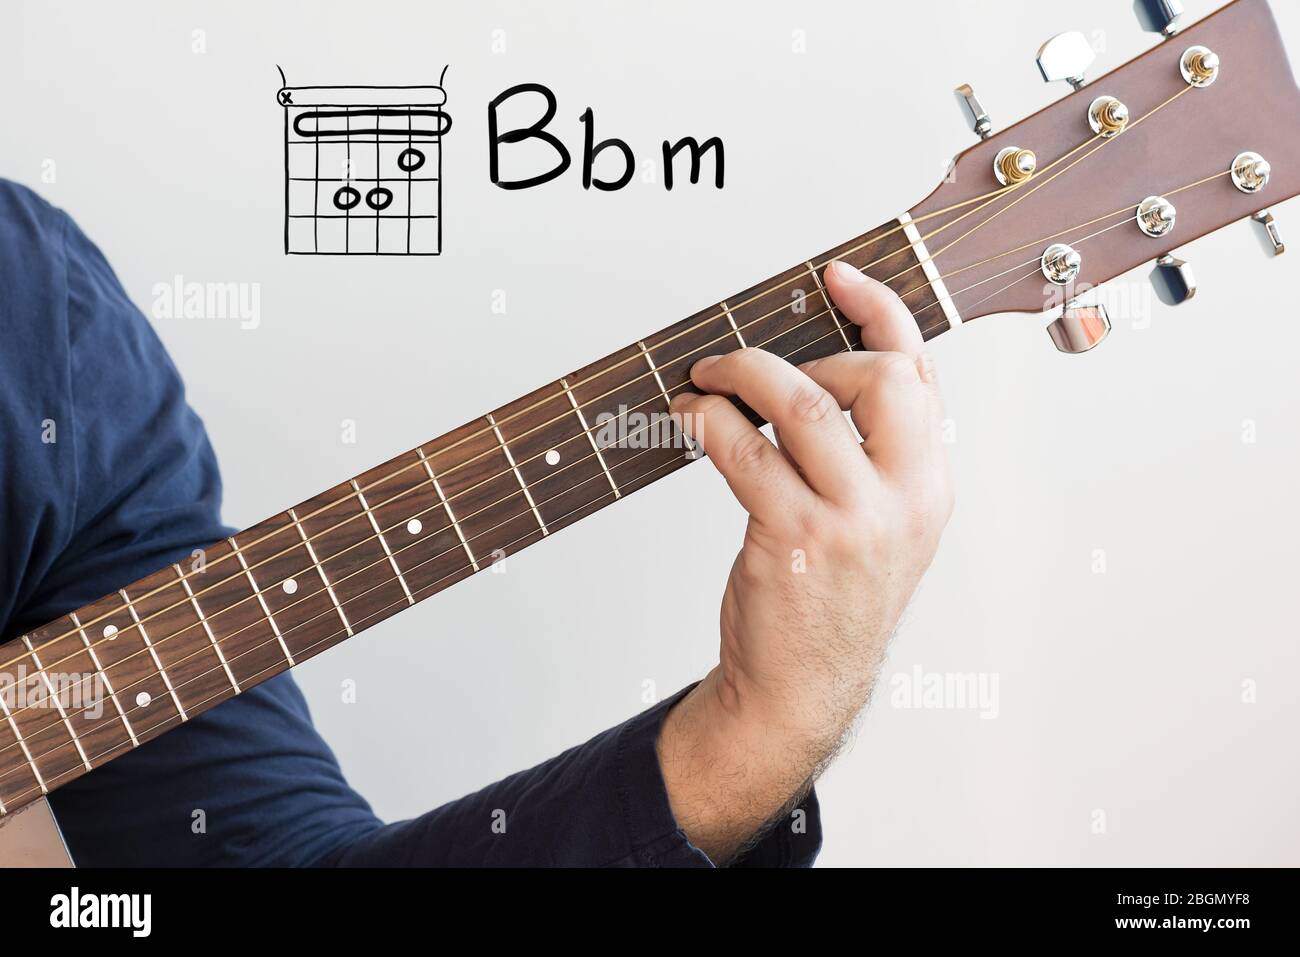 Learn Guitar - Man in a dark blue shirt playing guitar chords displayed on  whiteboard, Chord B flat minor Stock Photo - Alamy